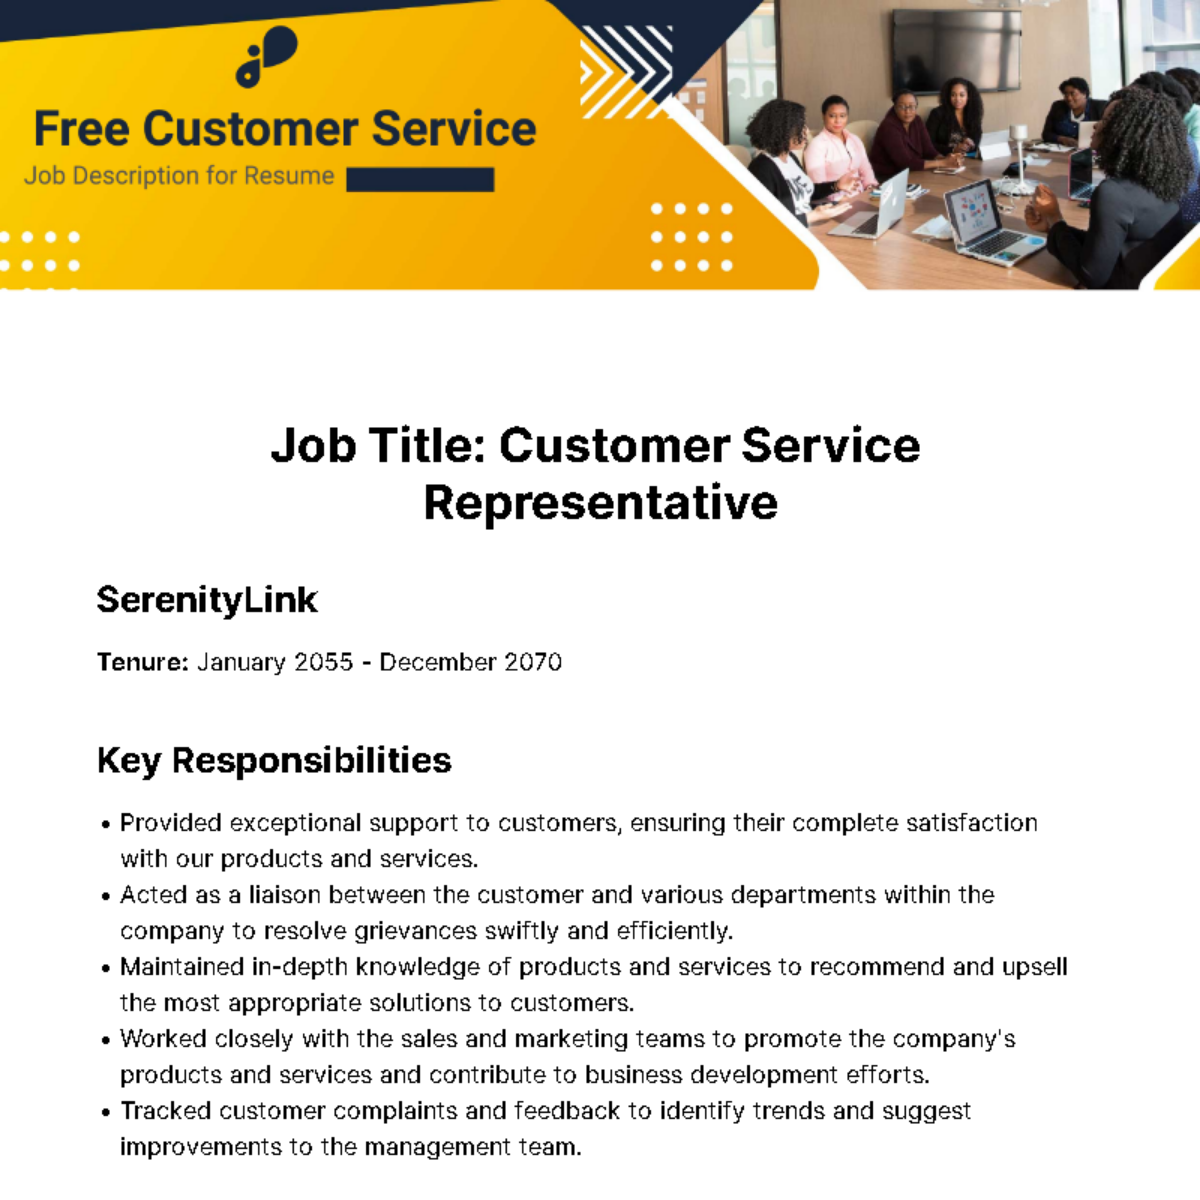 Free Customer Service Job Description for Resume Template